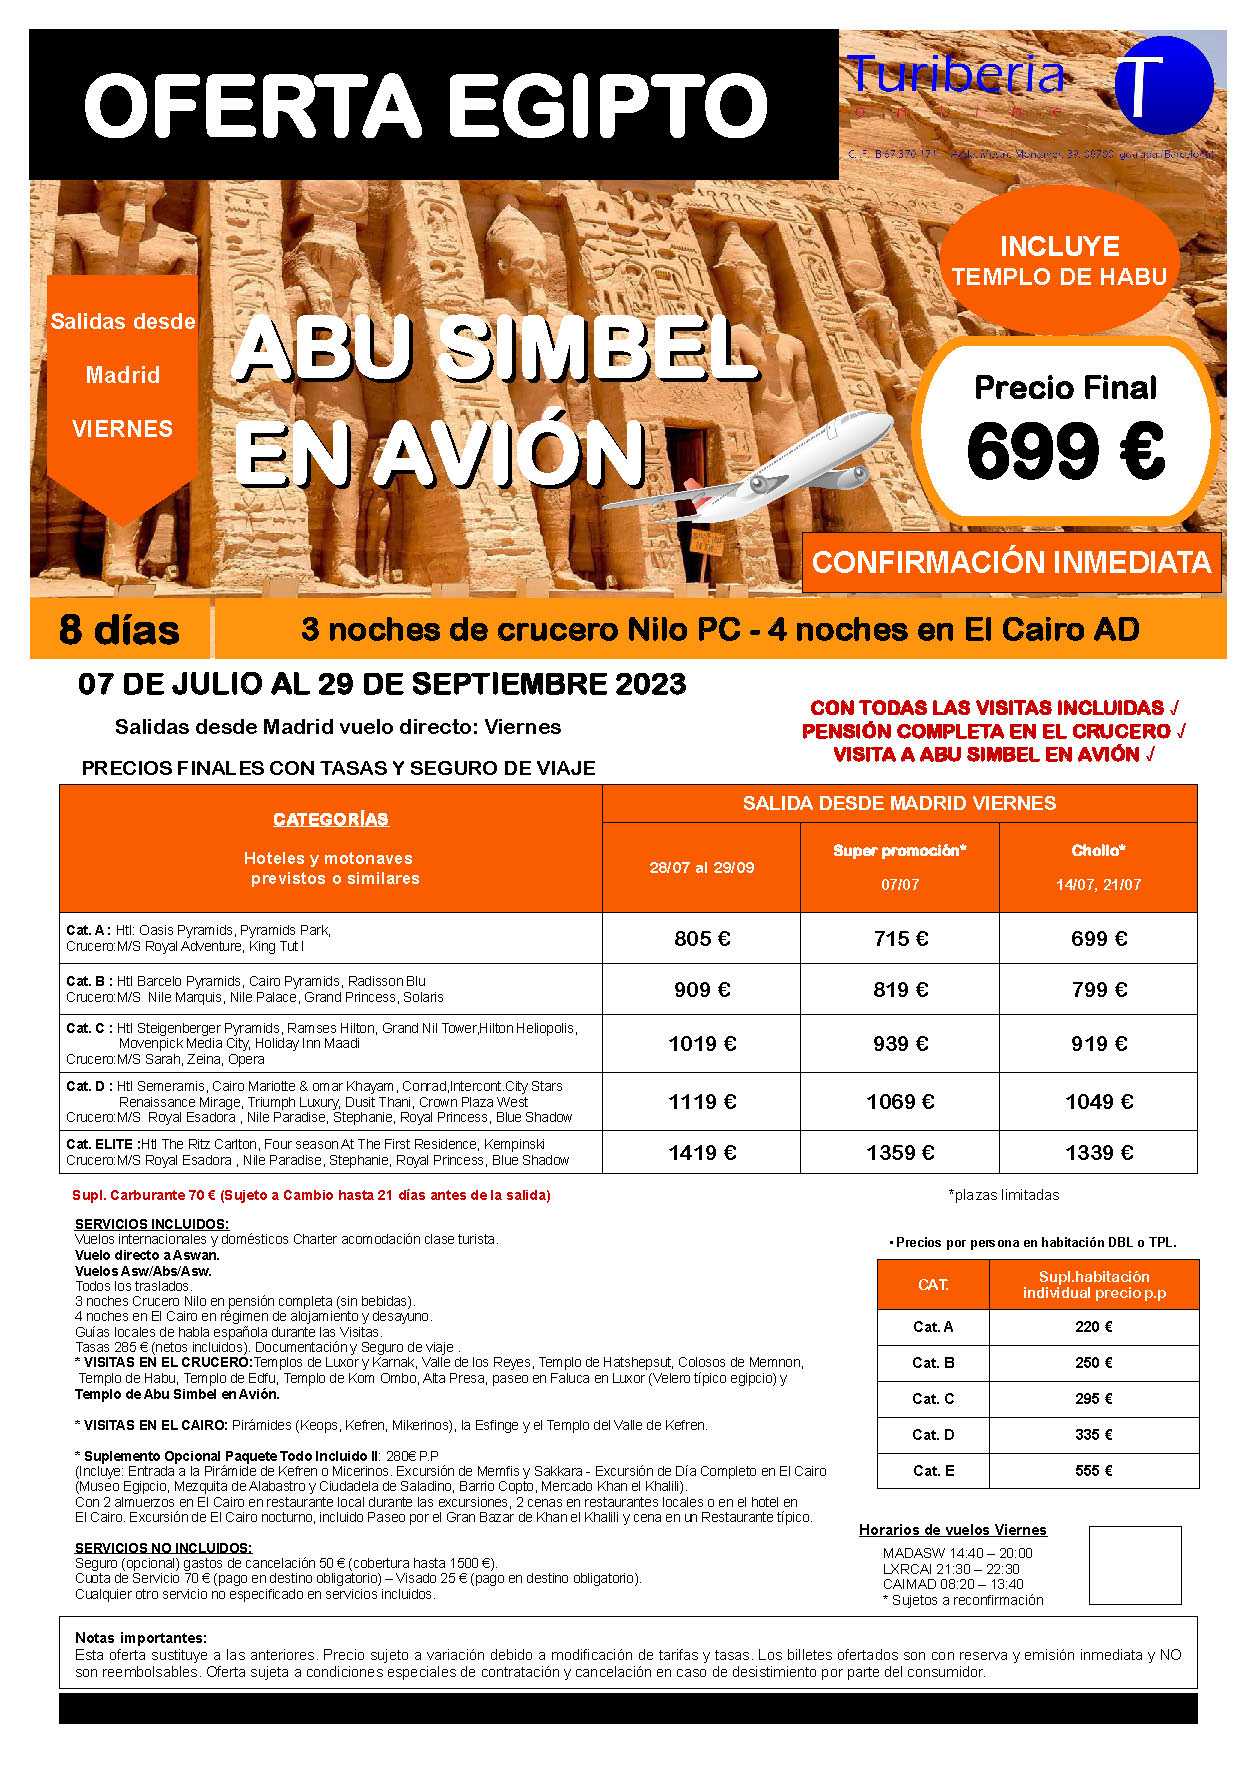 Ofertas Turiberia Julio a Septiembre 2023 Egipto Charter con Abu Simbel en avion 8 dias salida en vuelo especial directo desde Madrid